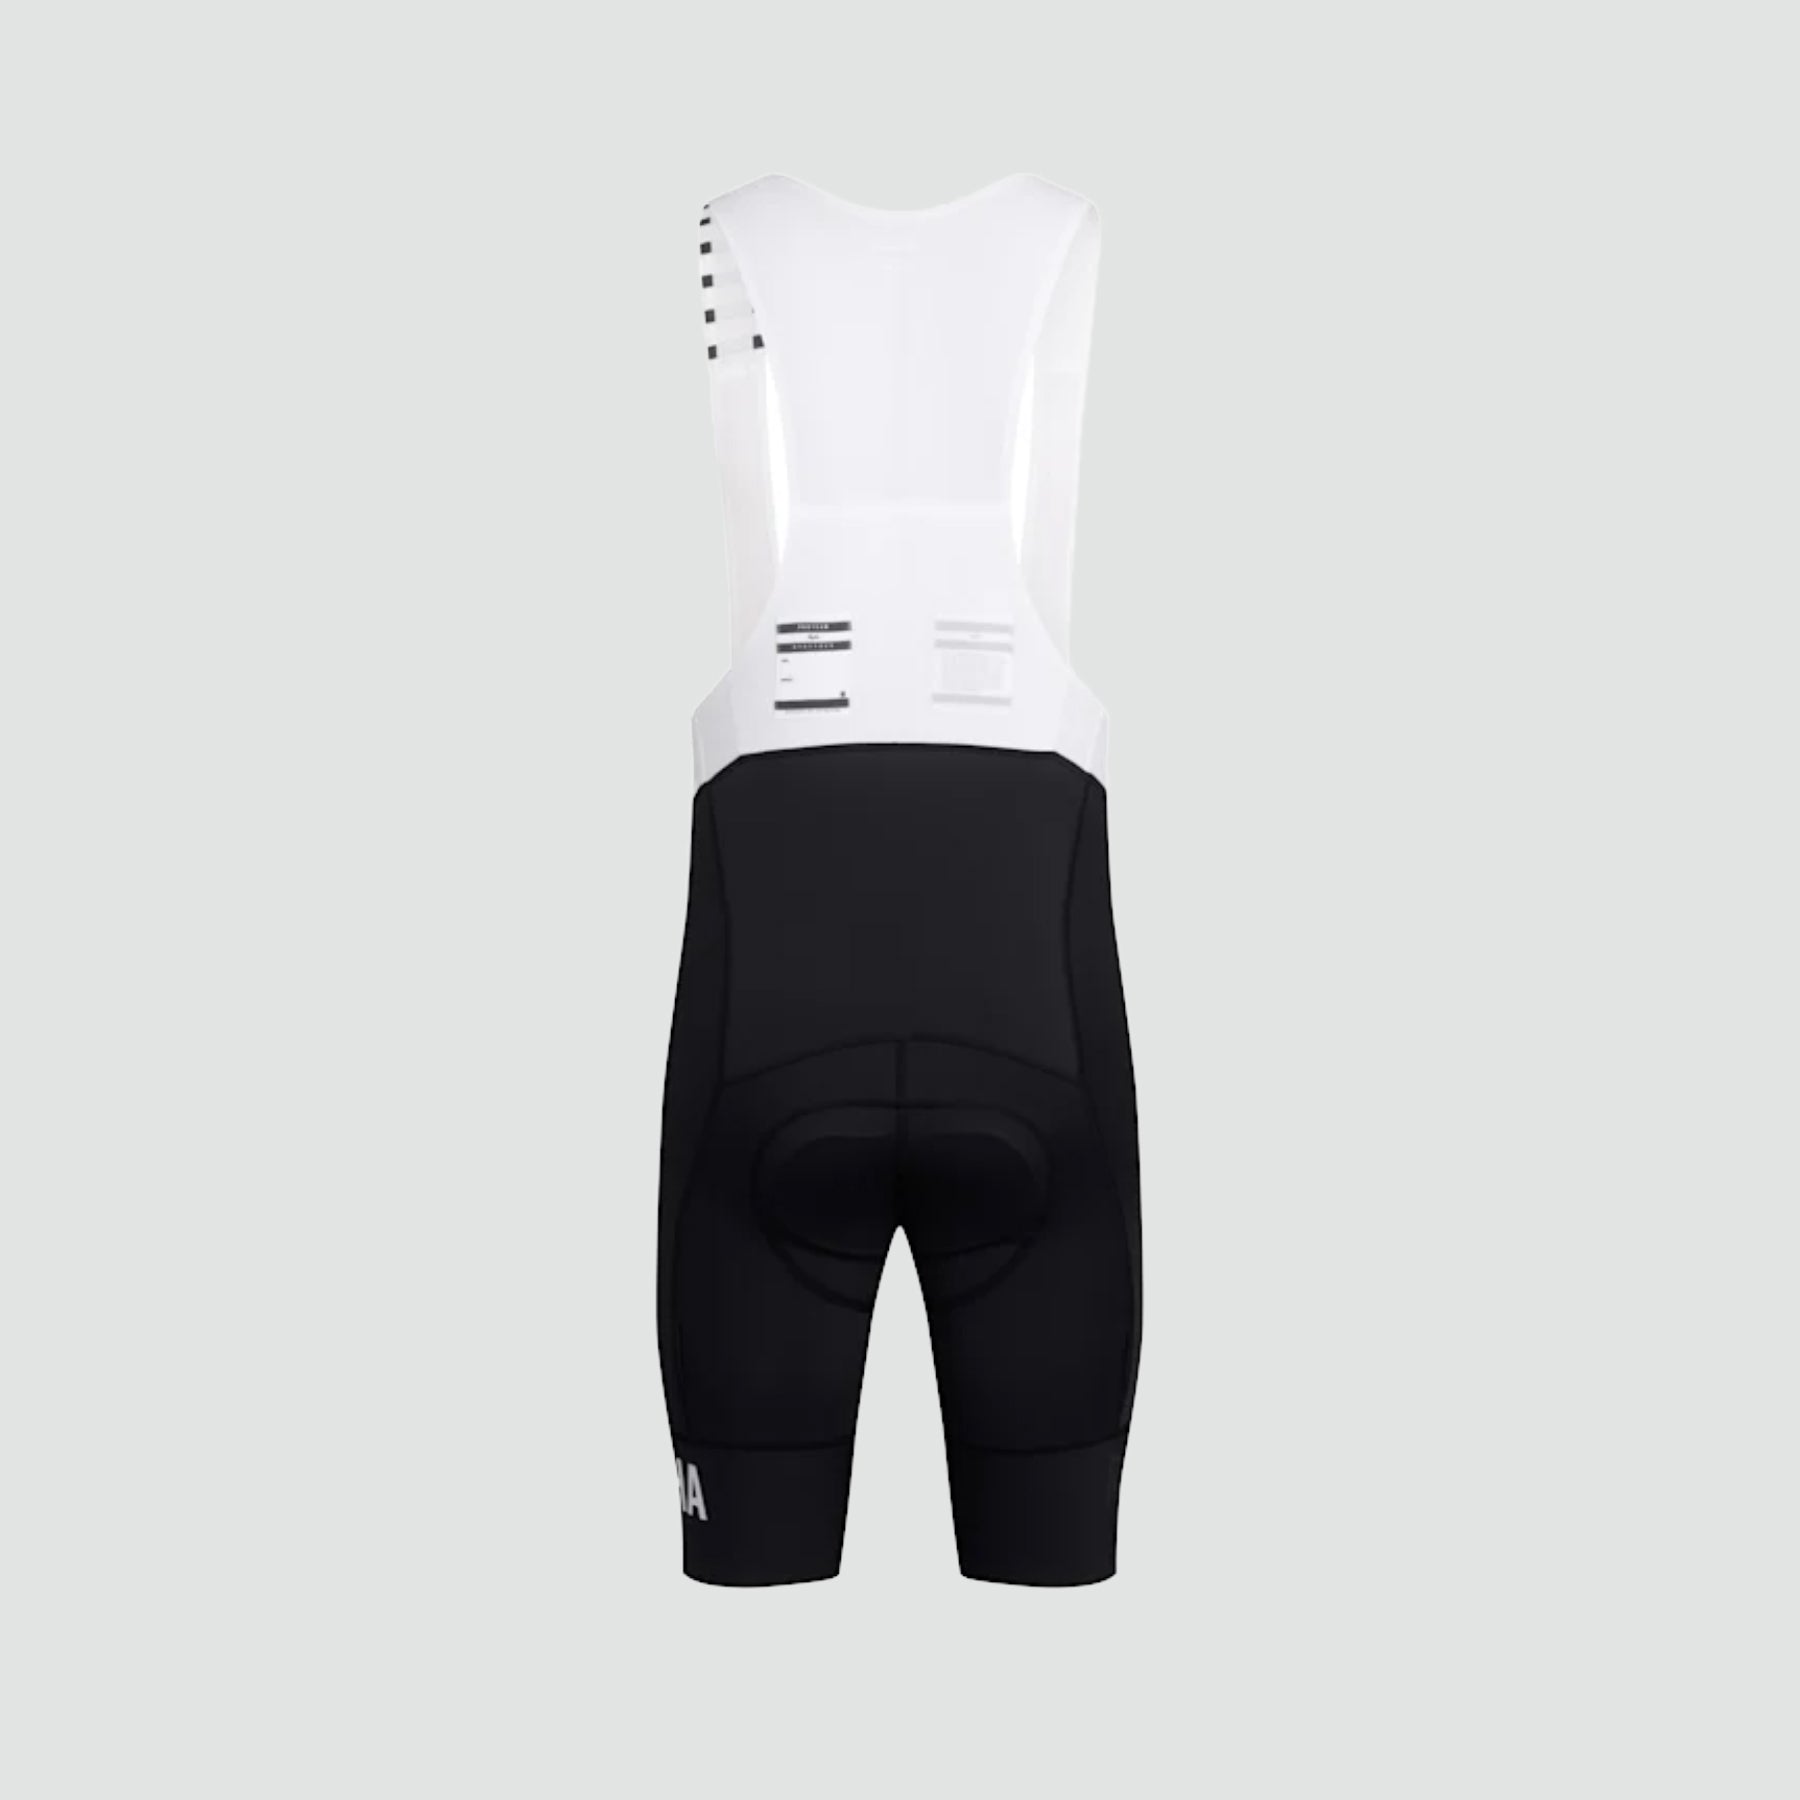 Pro Team Bib Shorts II - Regular - Black/White